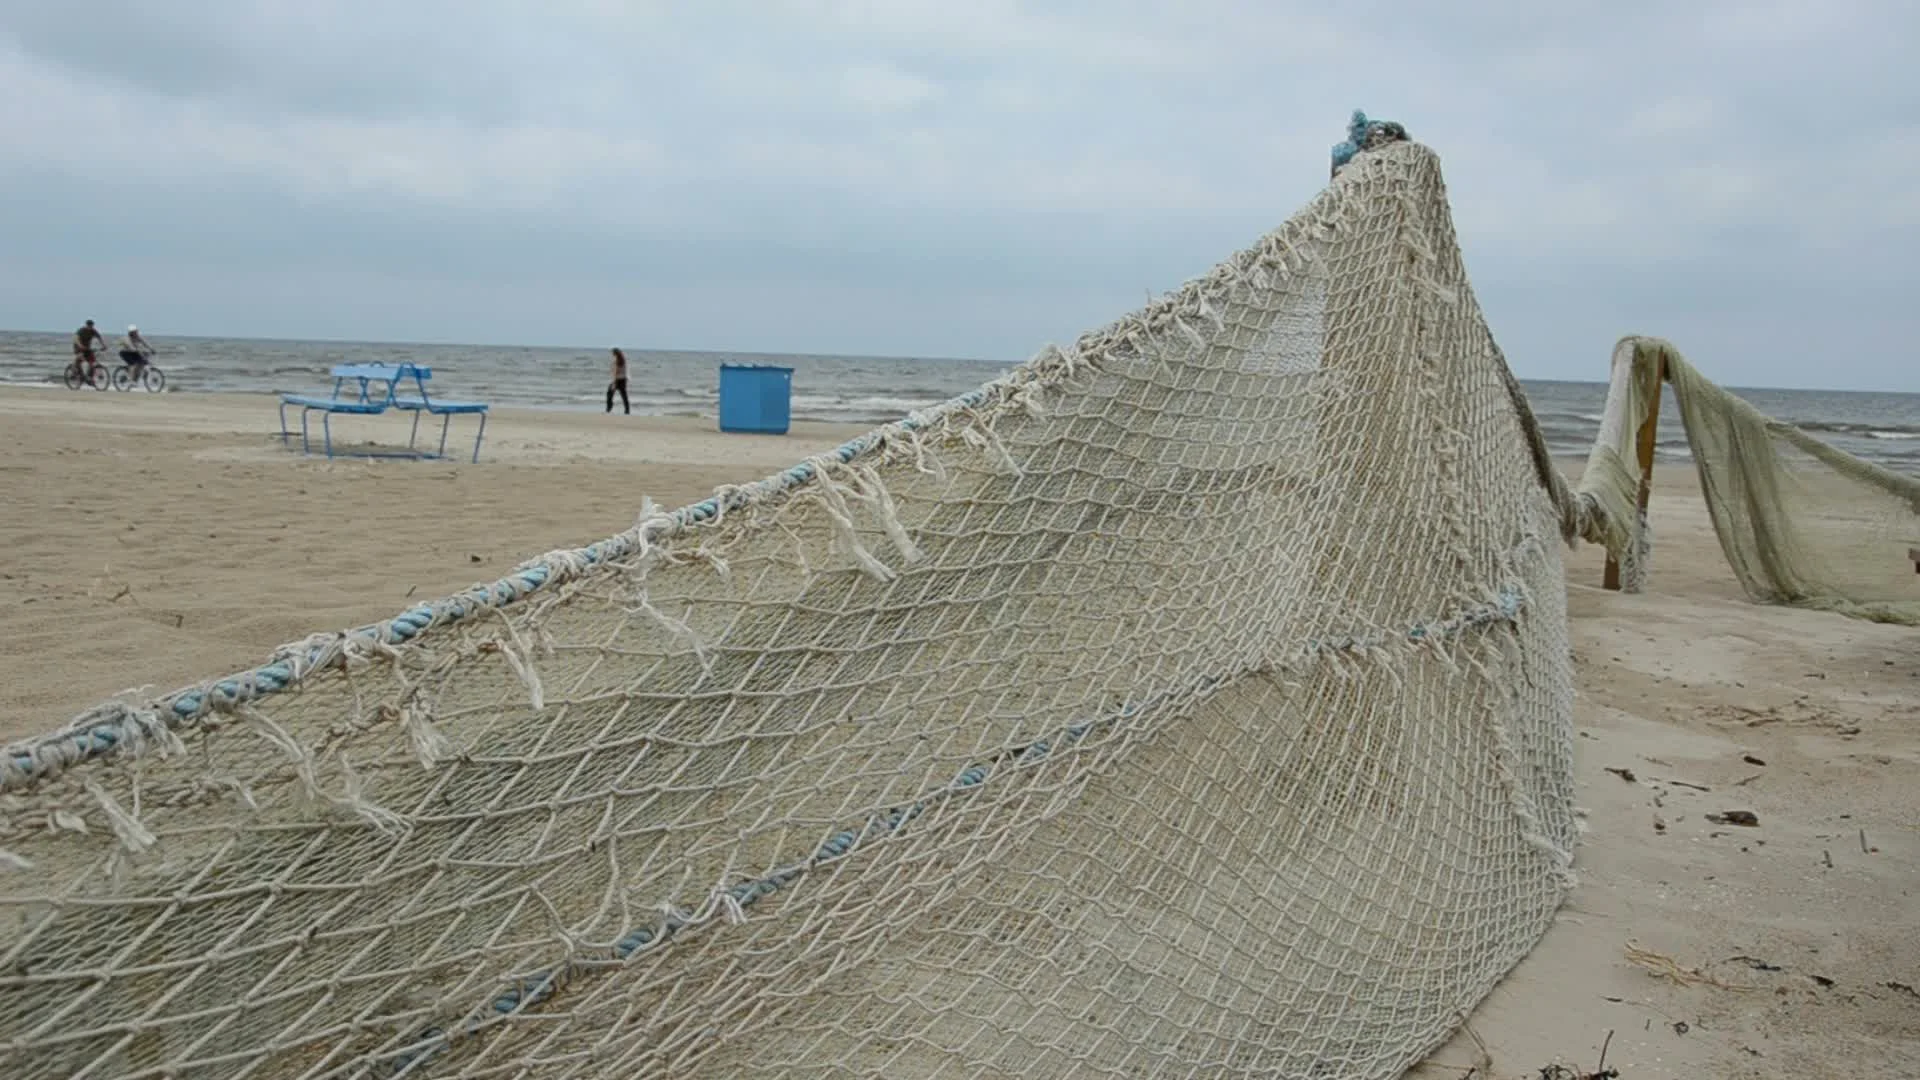 https://images.pond5.com/old-fishing-nets-sea-beach-011498666_prevstill.jpeg